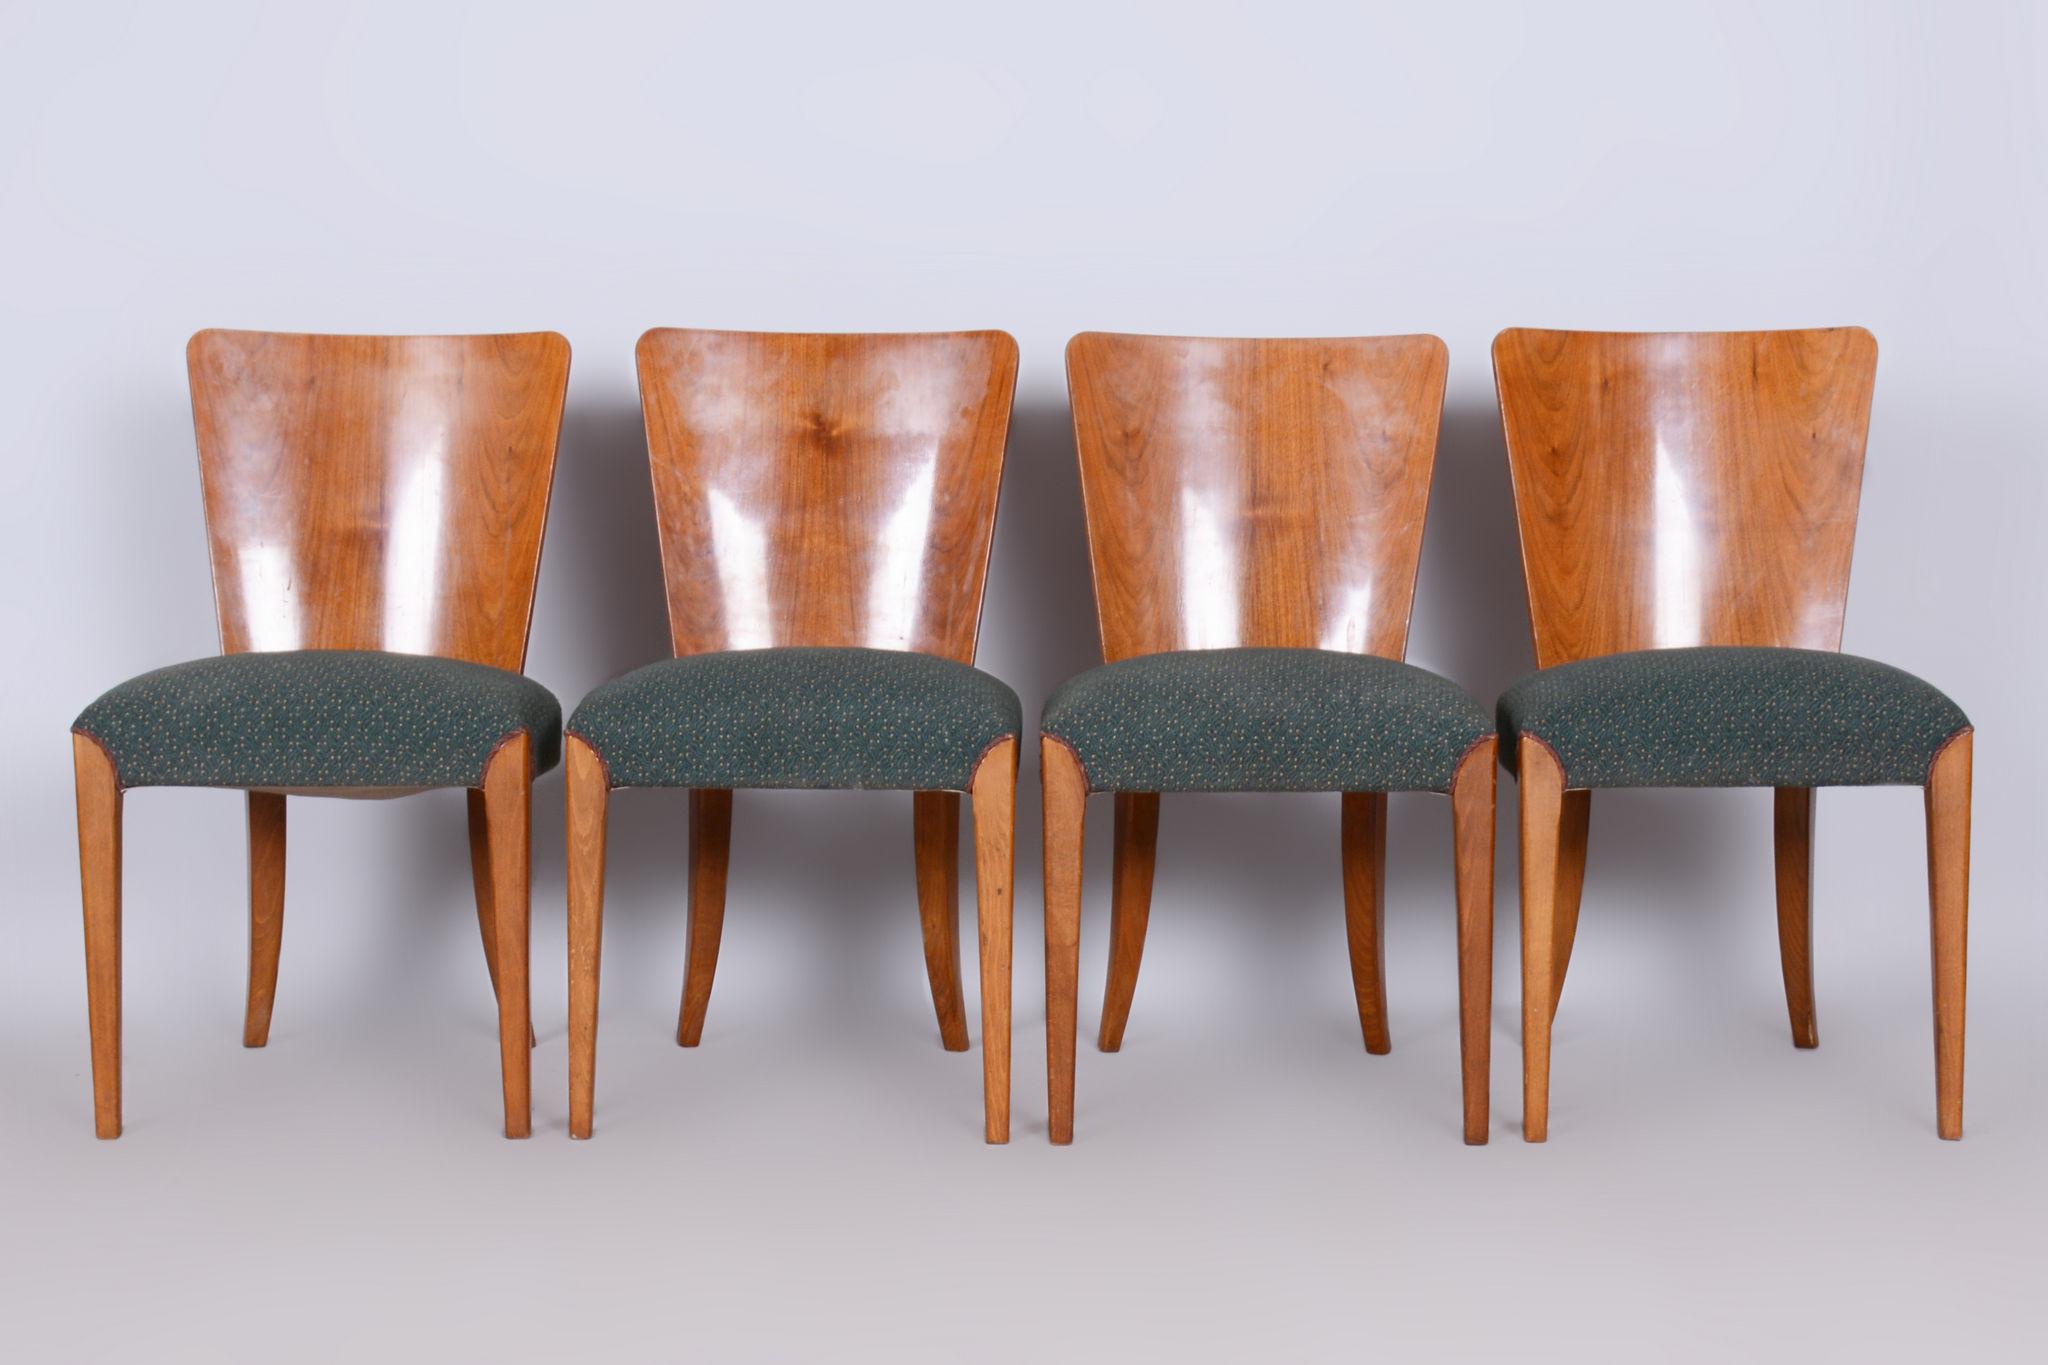 Set of Four Original ArtDeco Chairs, Halabala, UP Zavody, Beech, Czechia, 1940s For Sale 4